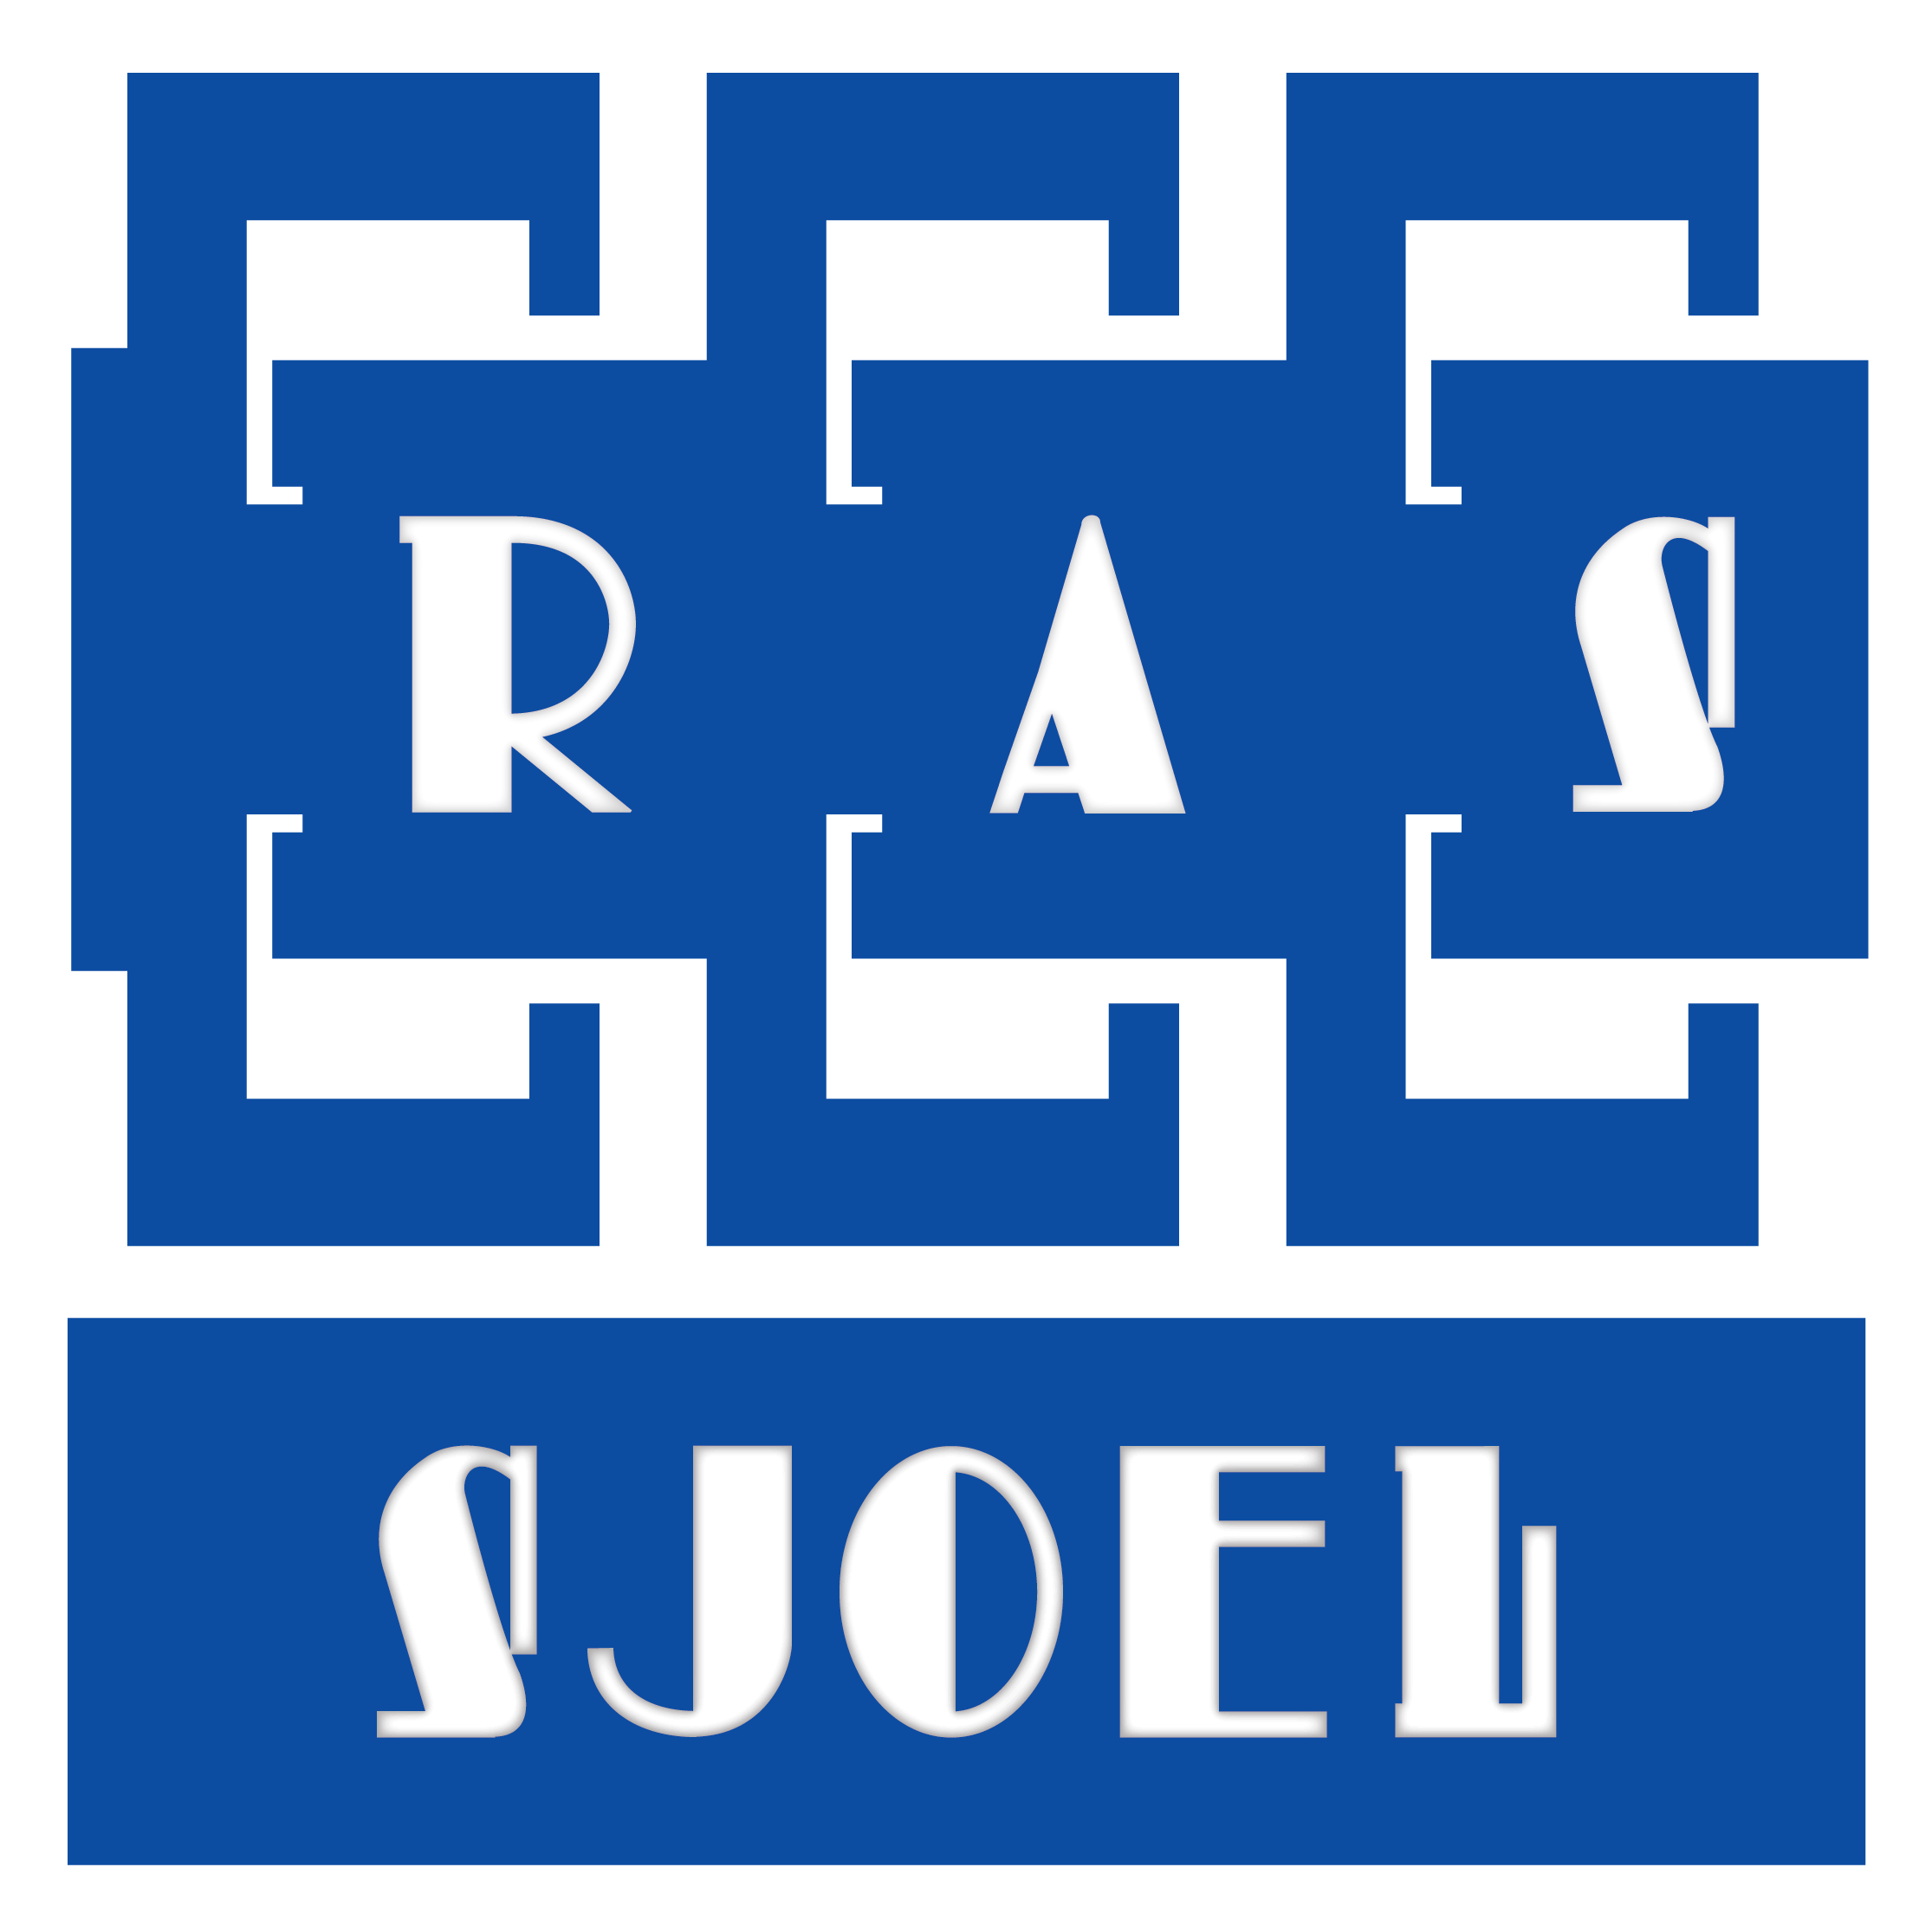 logo RAS